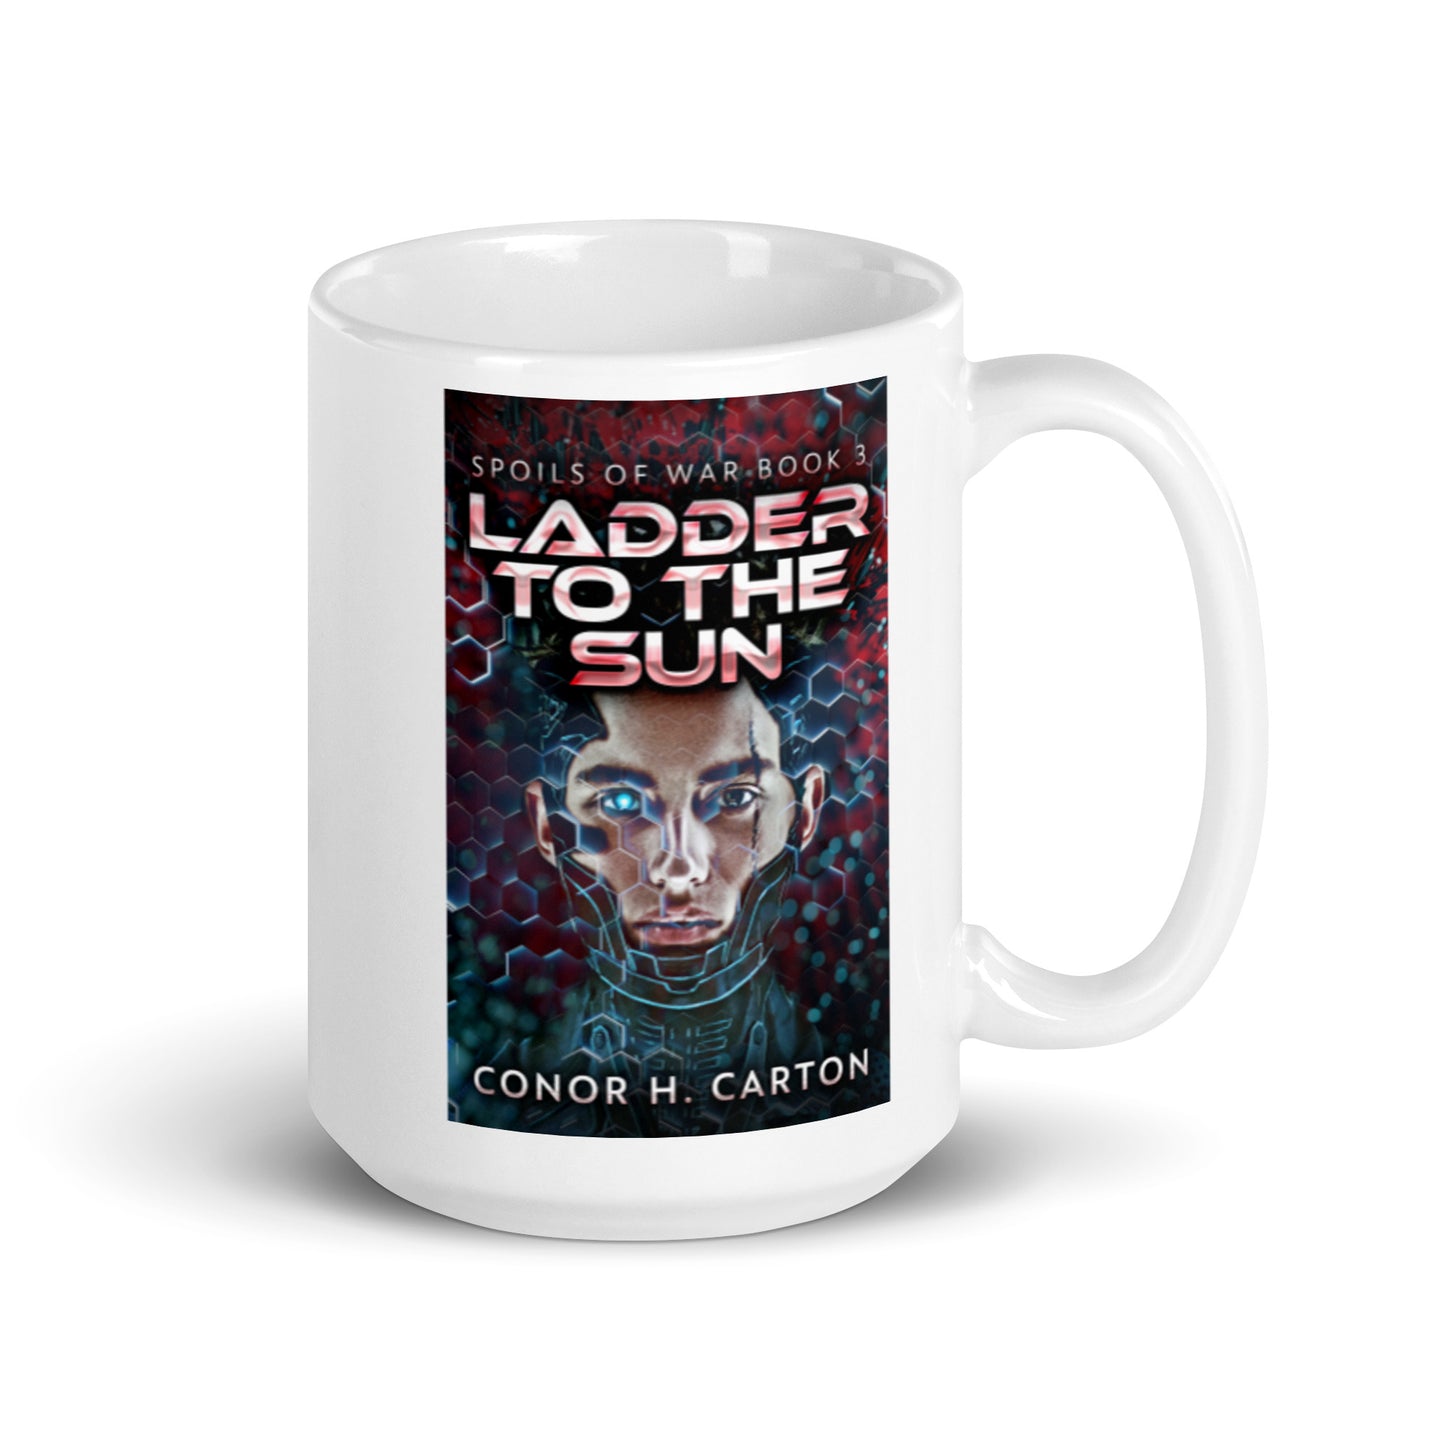 Ladder To The Sun - White Coffee Mug